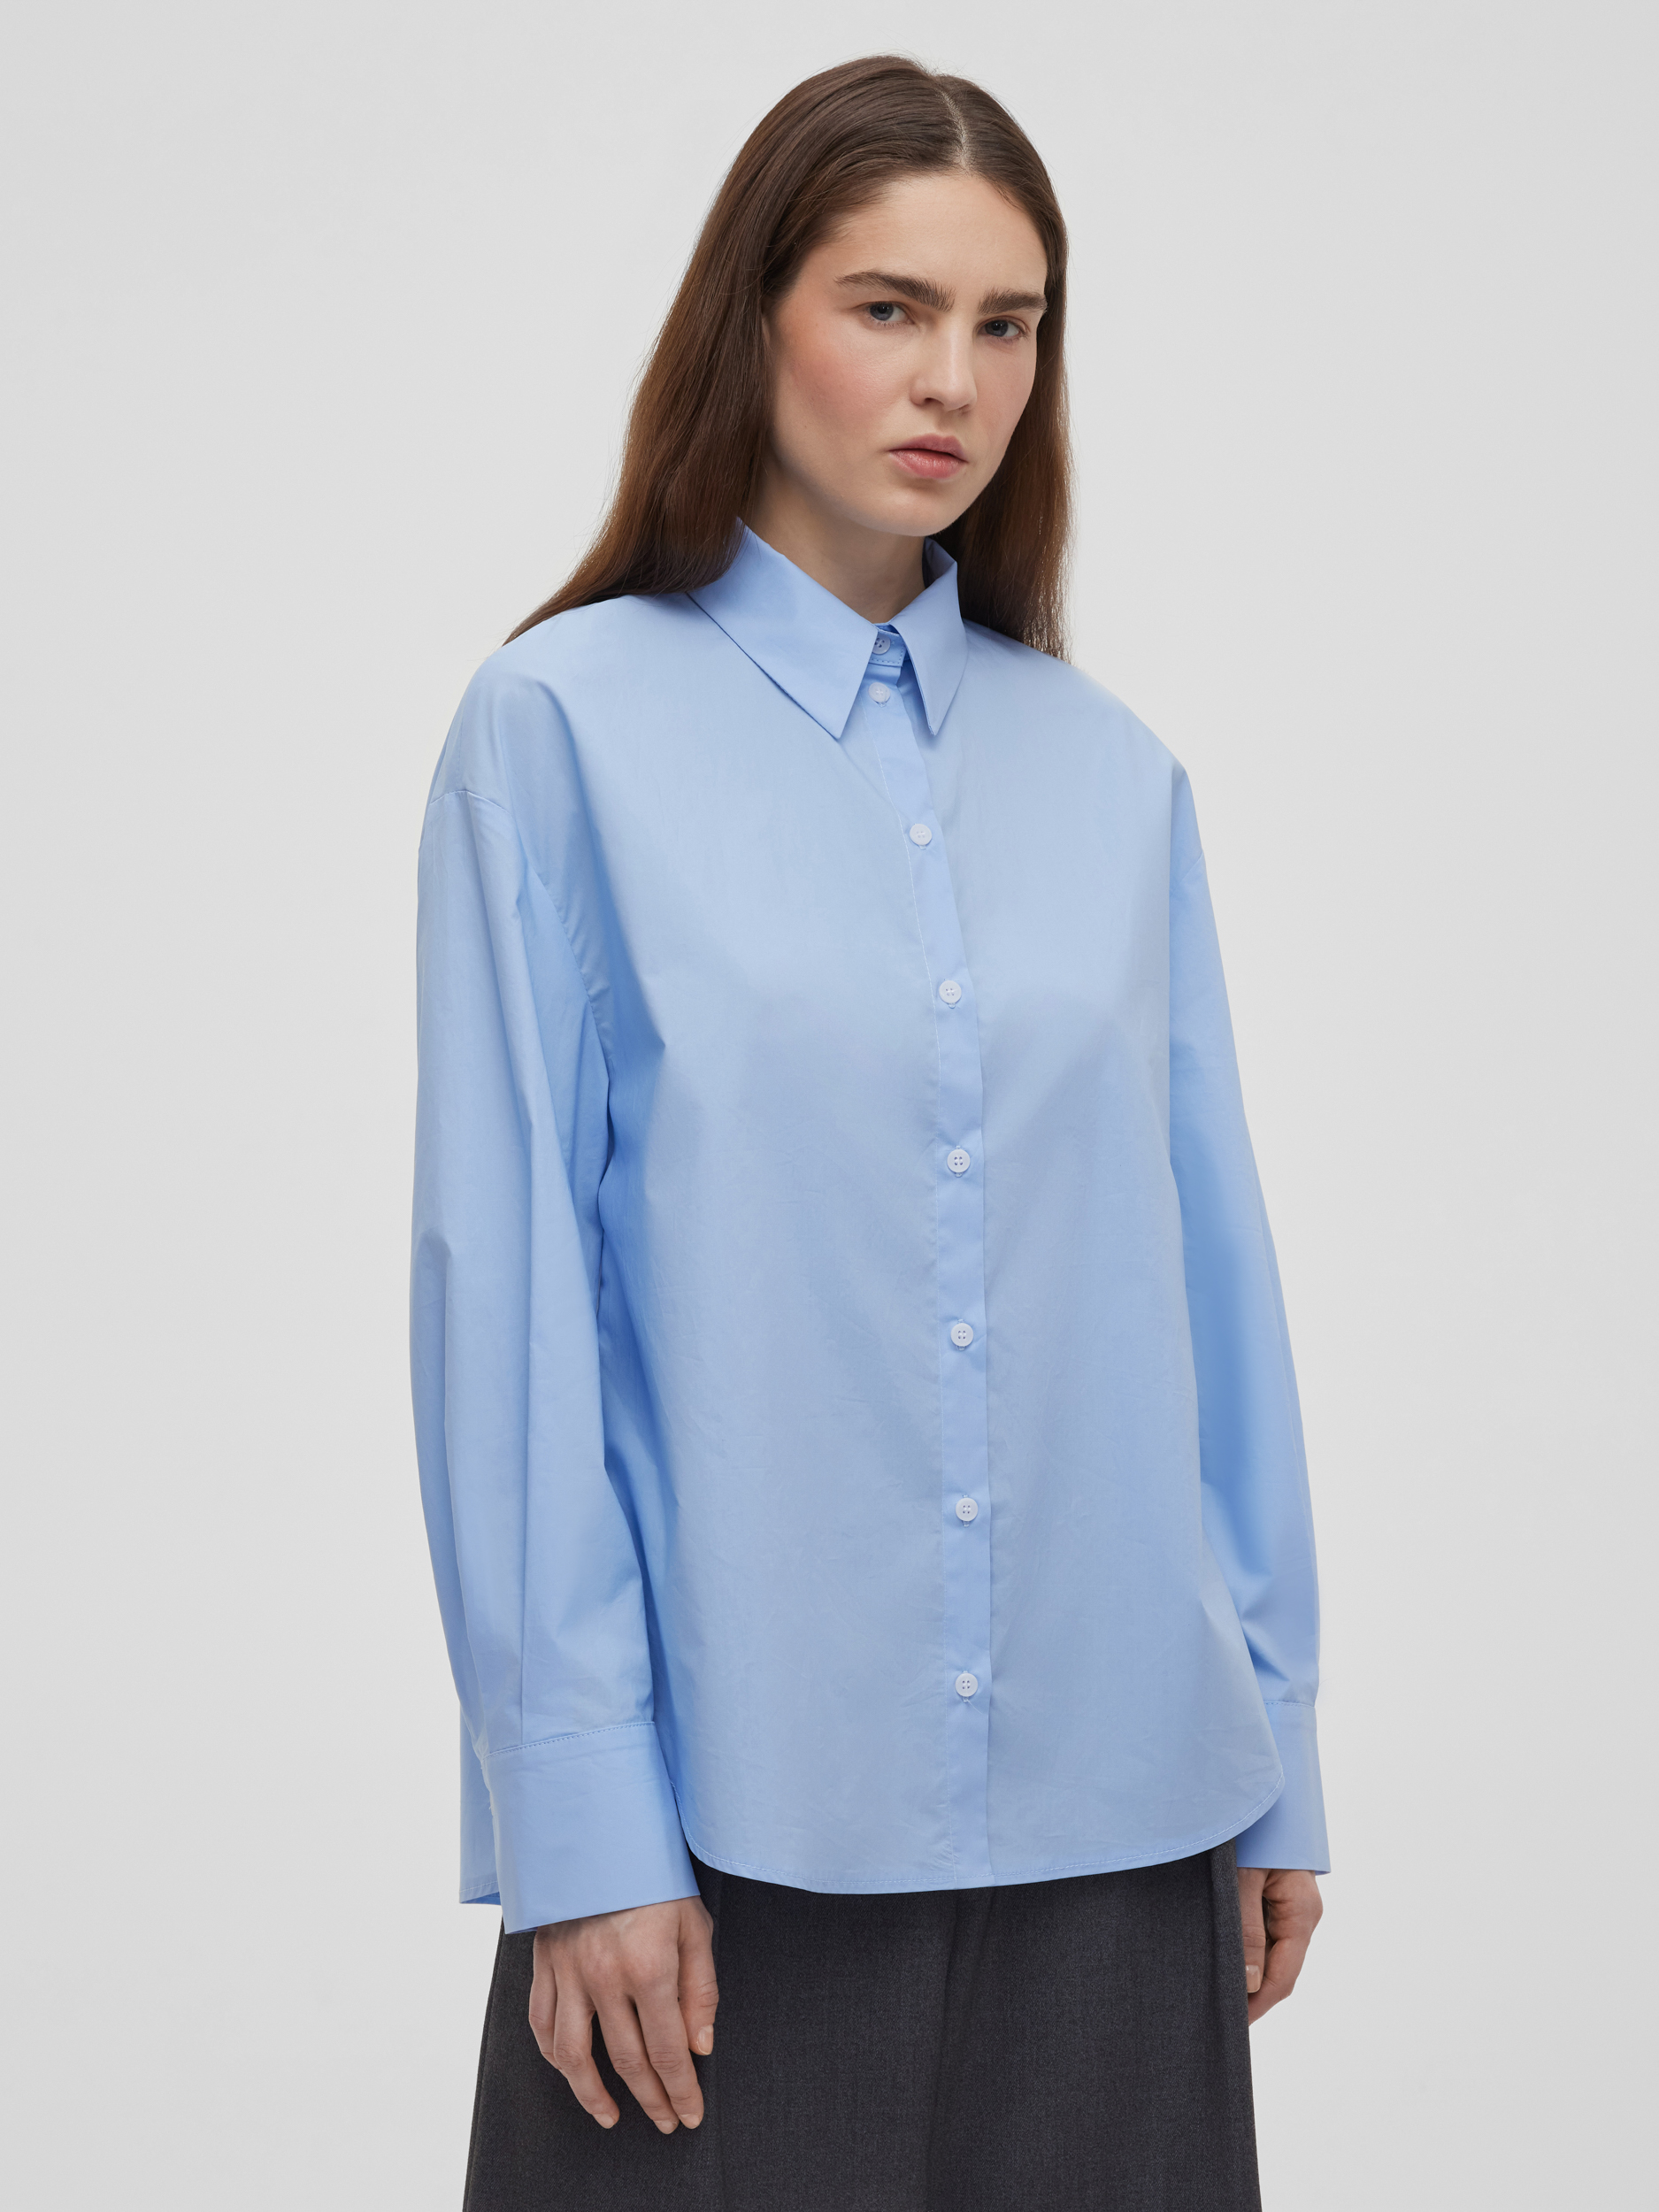 Рубашка свободного кроя с защипами XS/S, светло-голубой